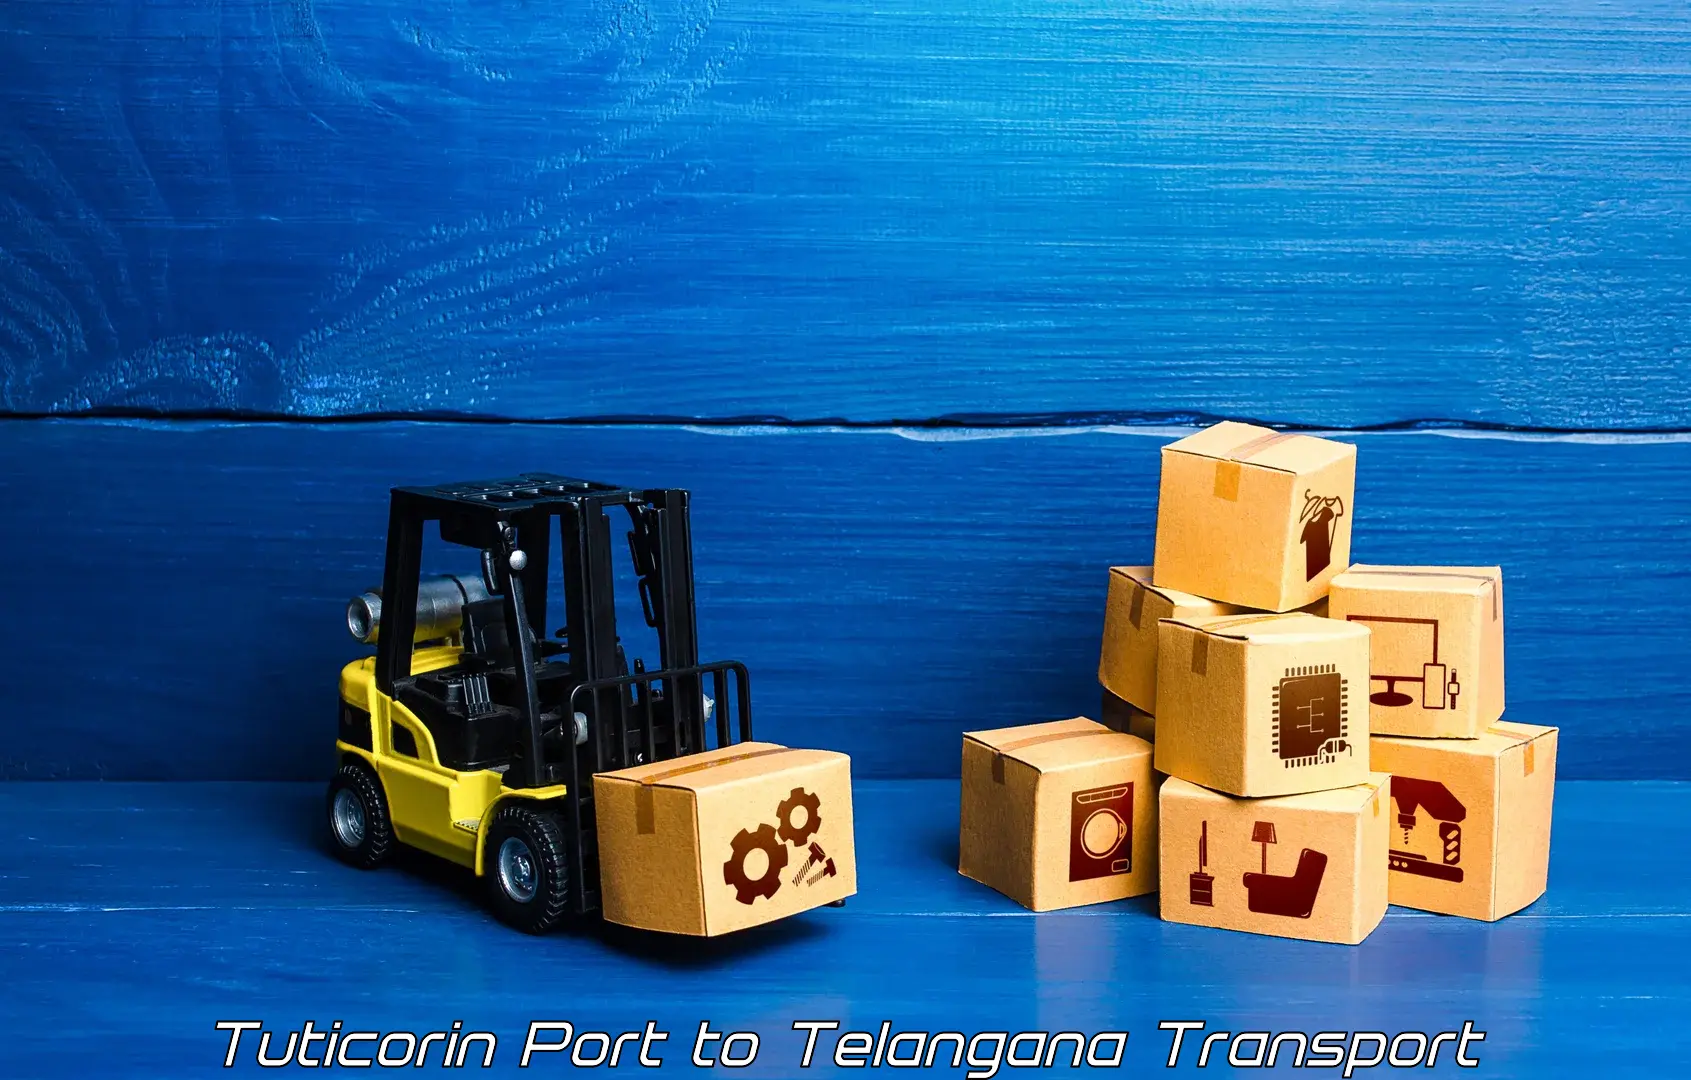 Vehicle transport services in Tuticorin Port to Telangana